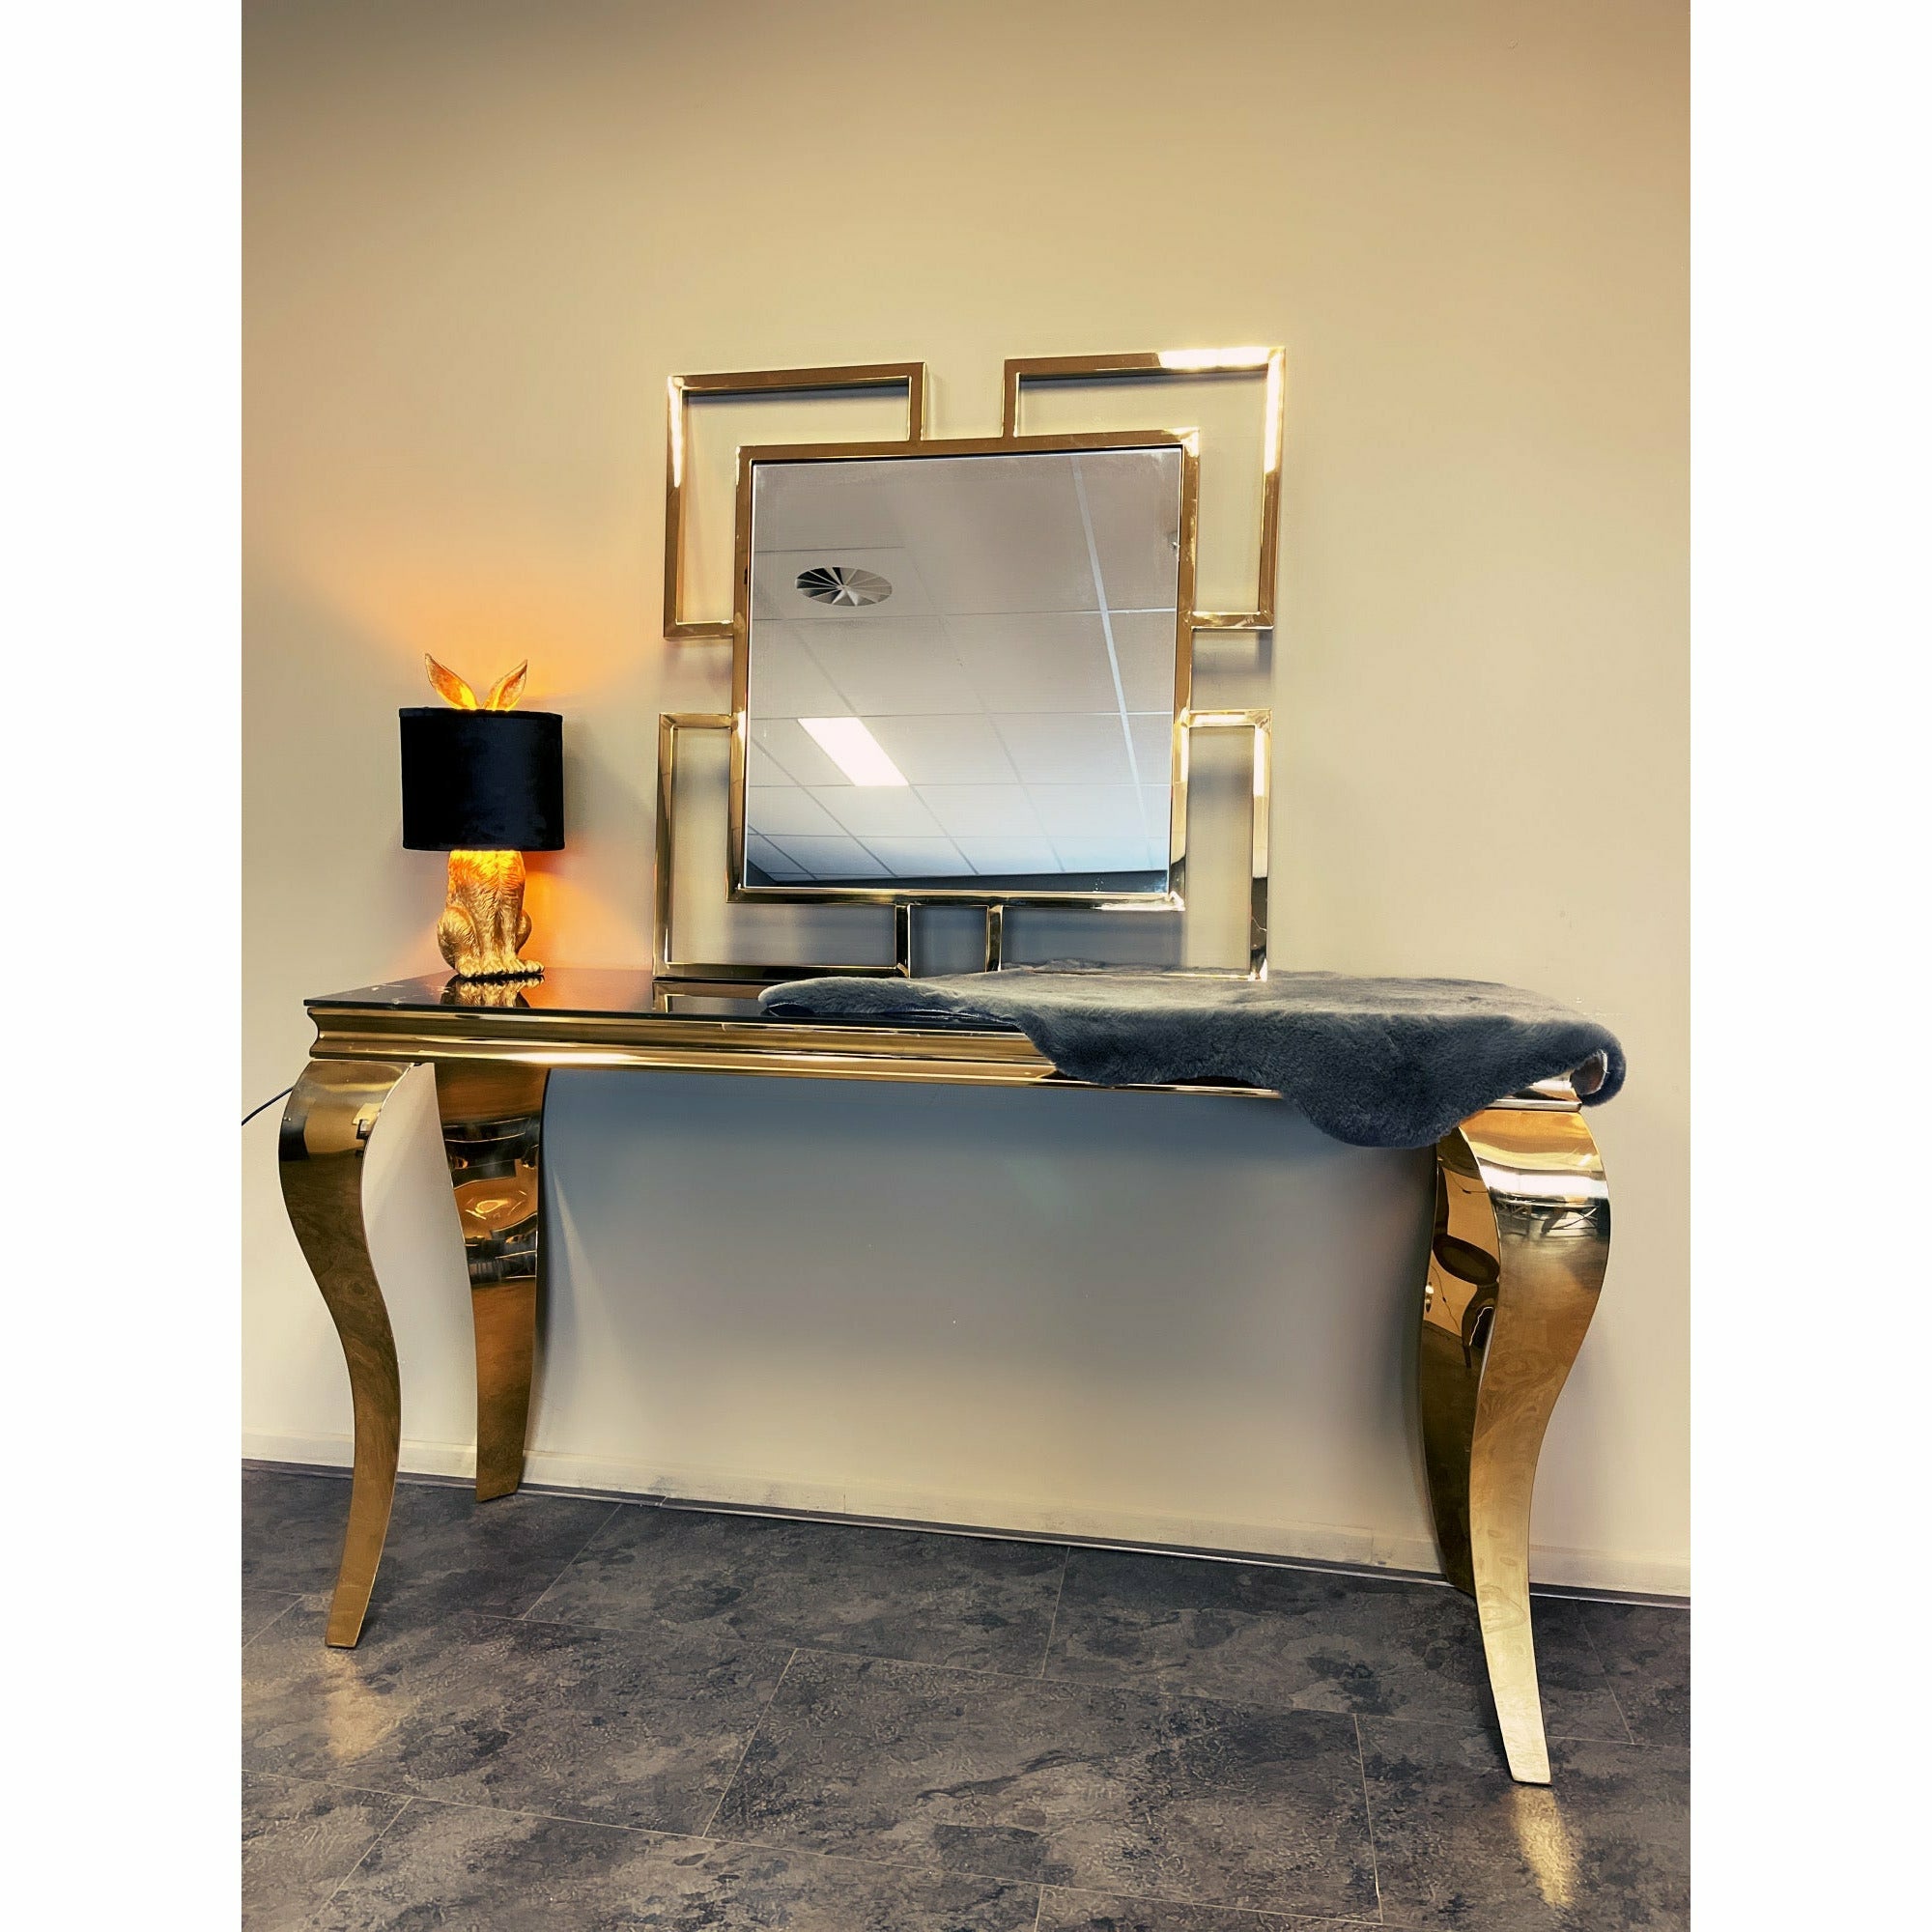 Gold Mirror 80x80 cm - Luxury Living 